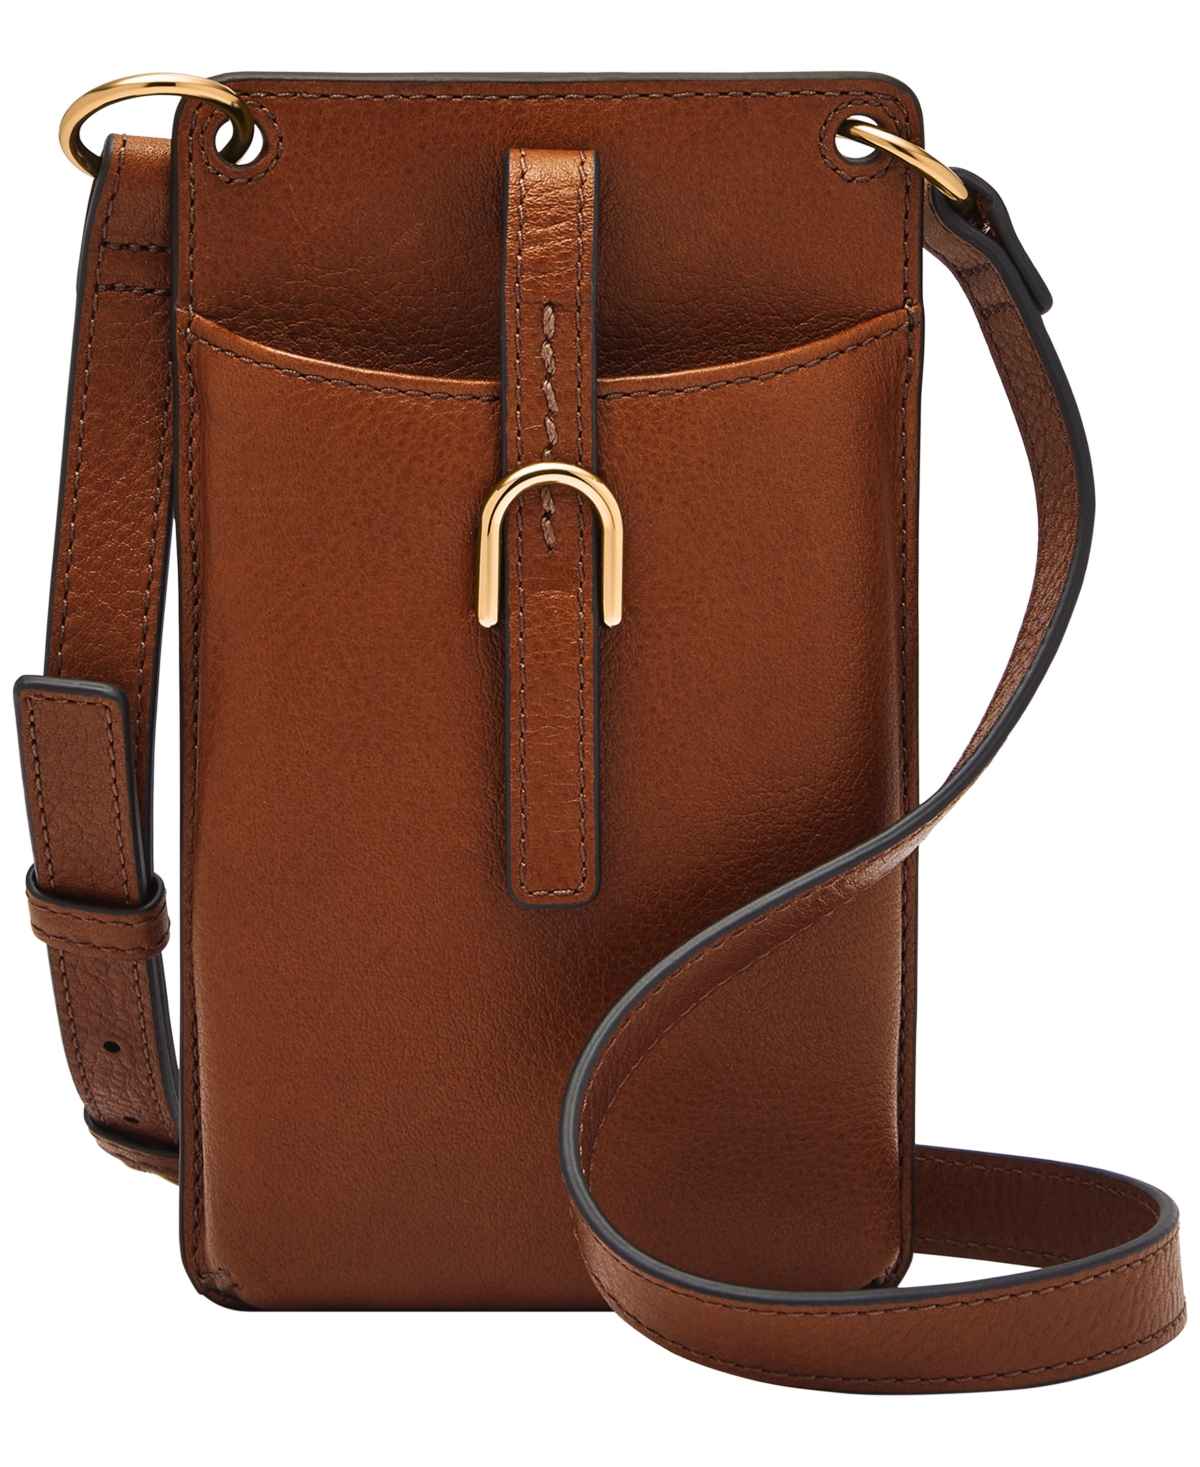 Vada Leather Phone Bag - Brown